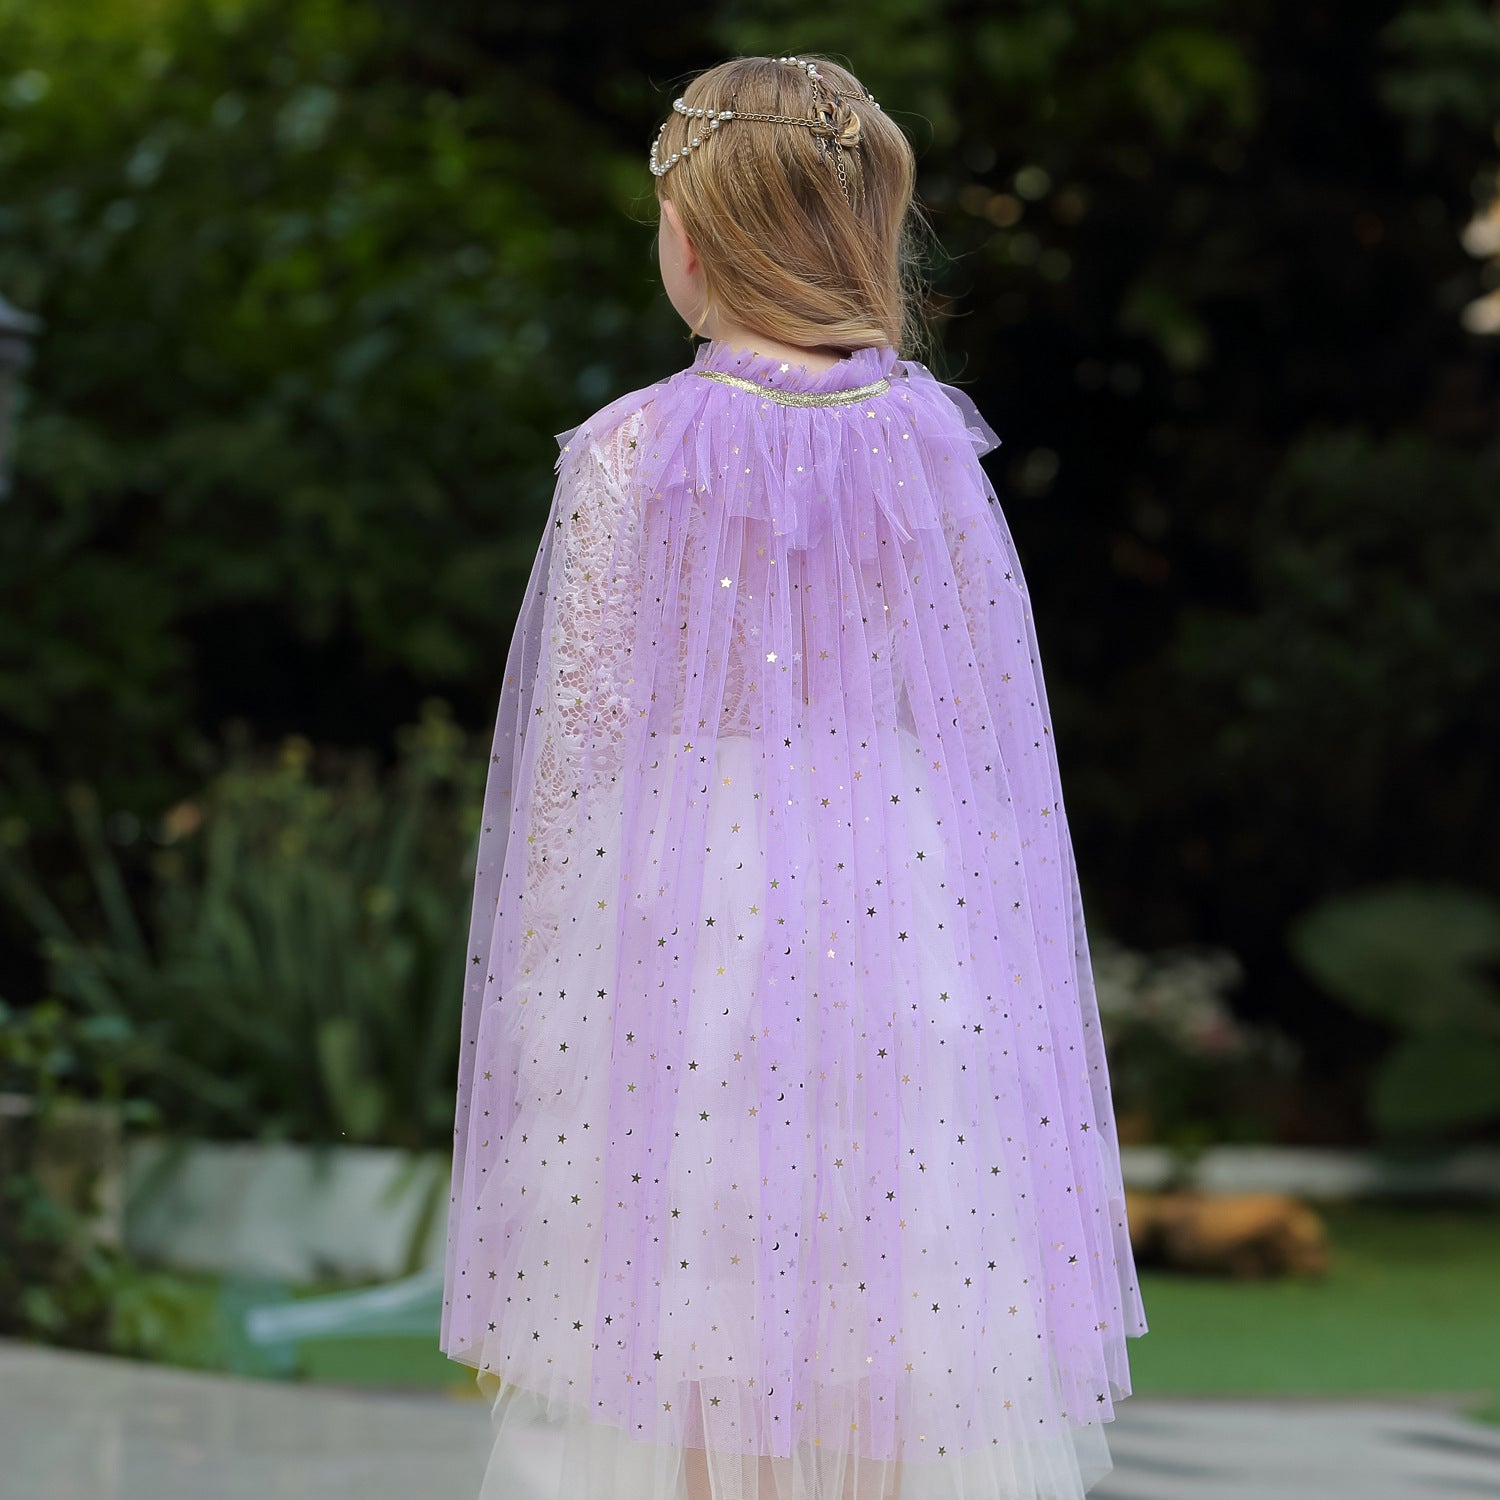 Princess Elsa Costume Rainbow Mesh Cape Cloak with Shiny Sequin Shawl Outerwear